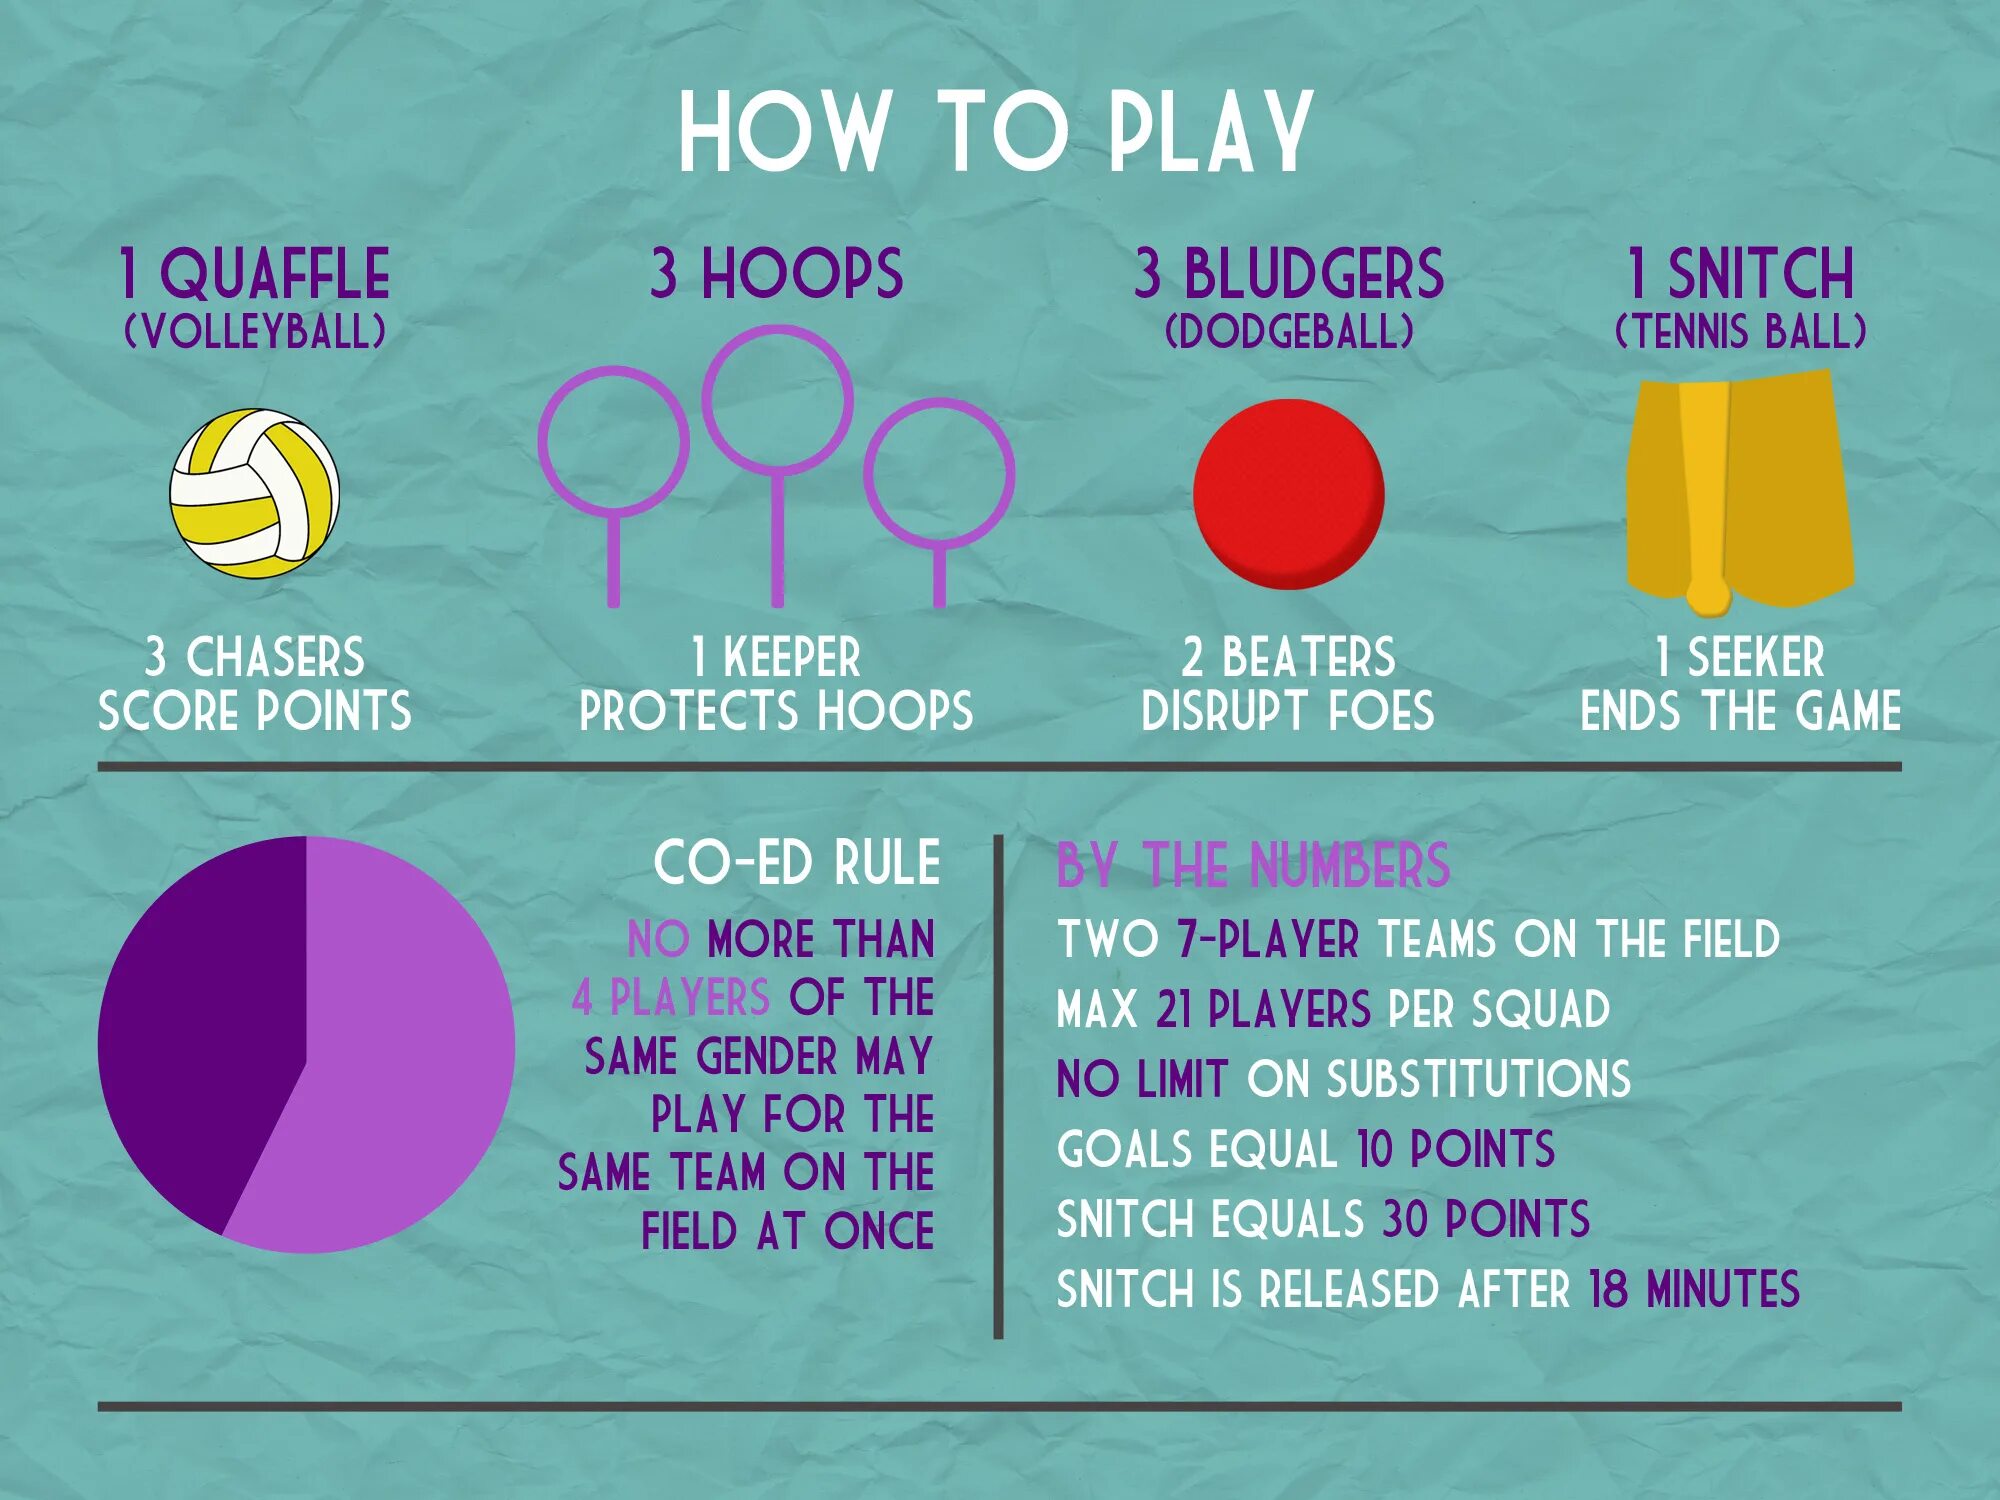 How to get player. Quidditch Rules. Квиддич позиции игроков. Правила игры в квиддич. Квиддич правила и игроки.